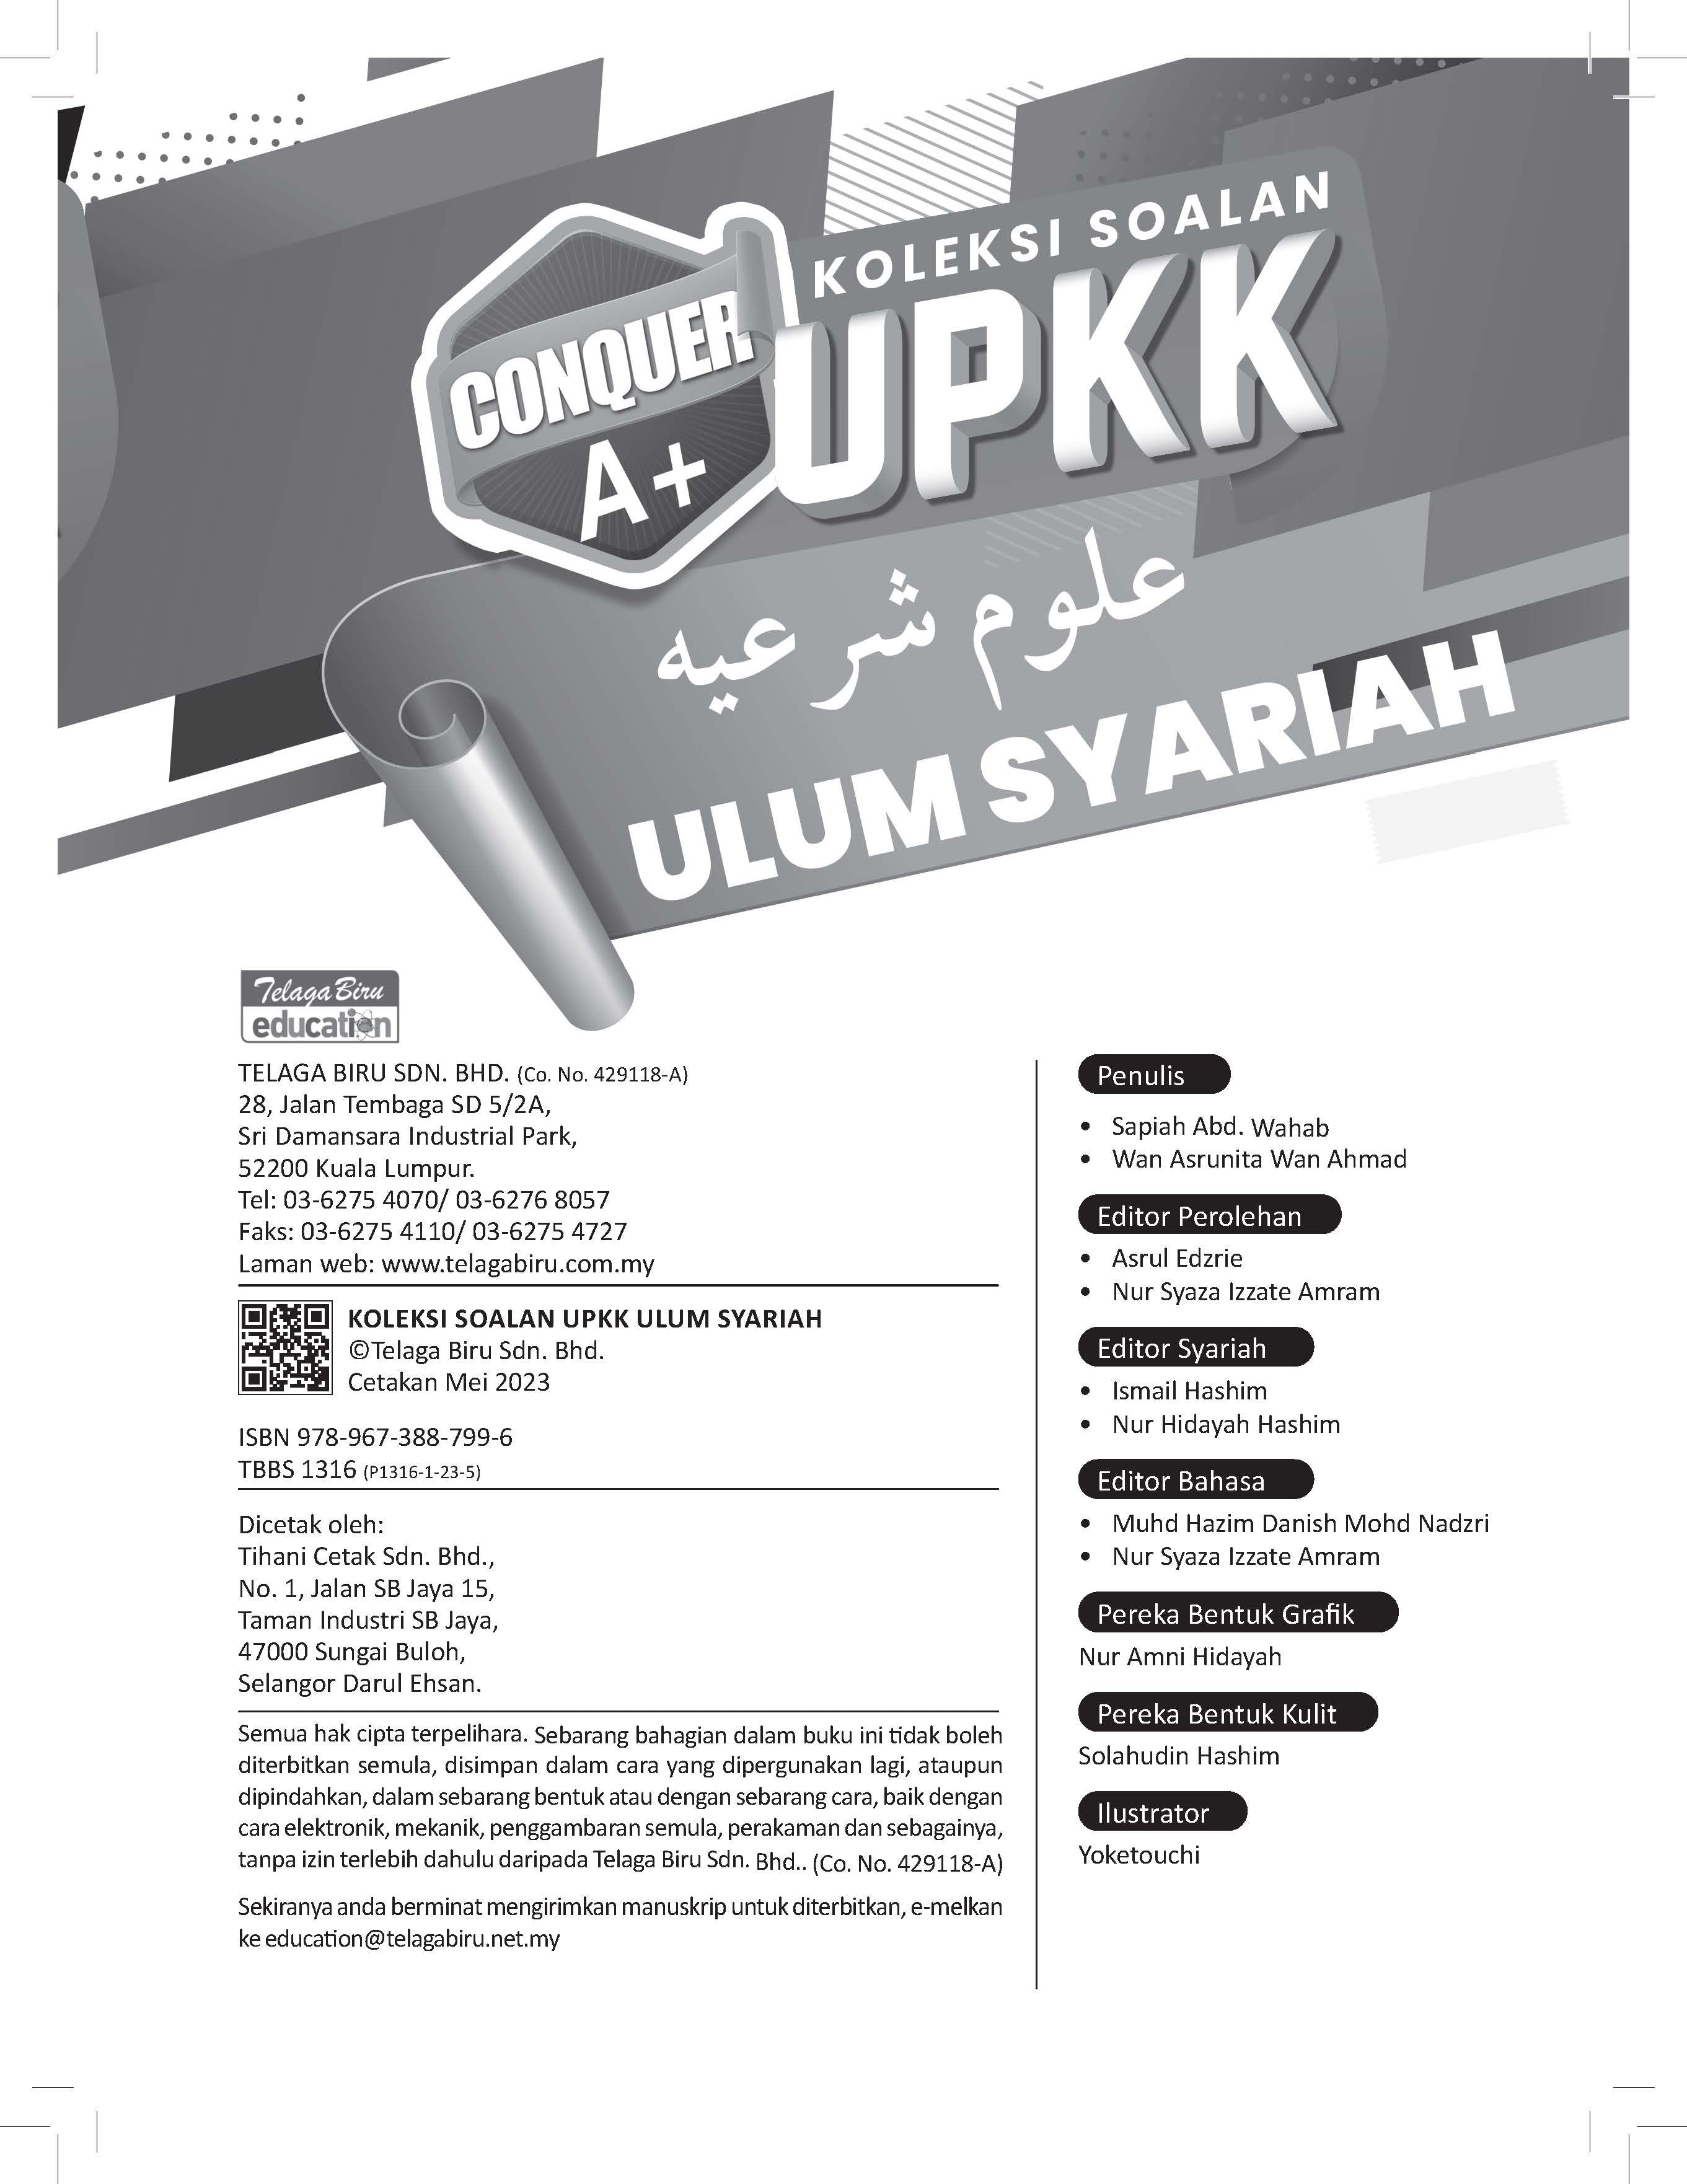 Conquer A+ Koleksi Soalan UPKK (Ulum Syariah) - (TBBS1316)